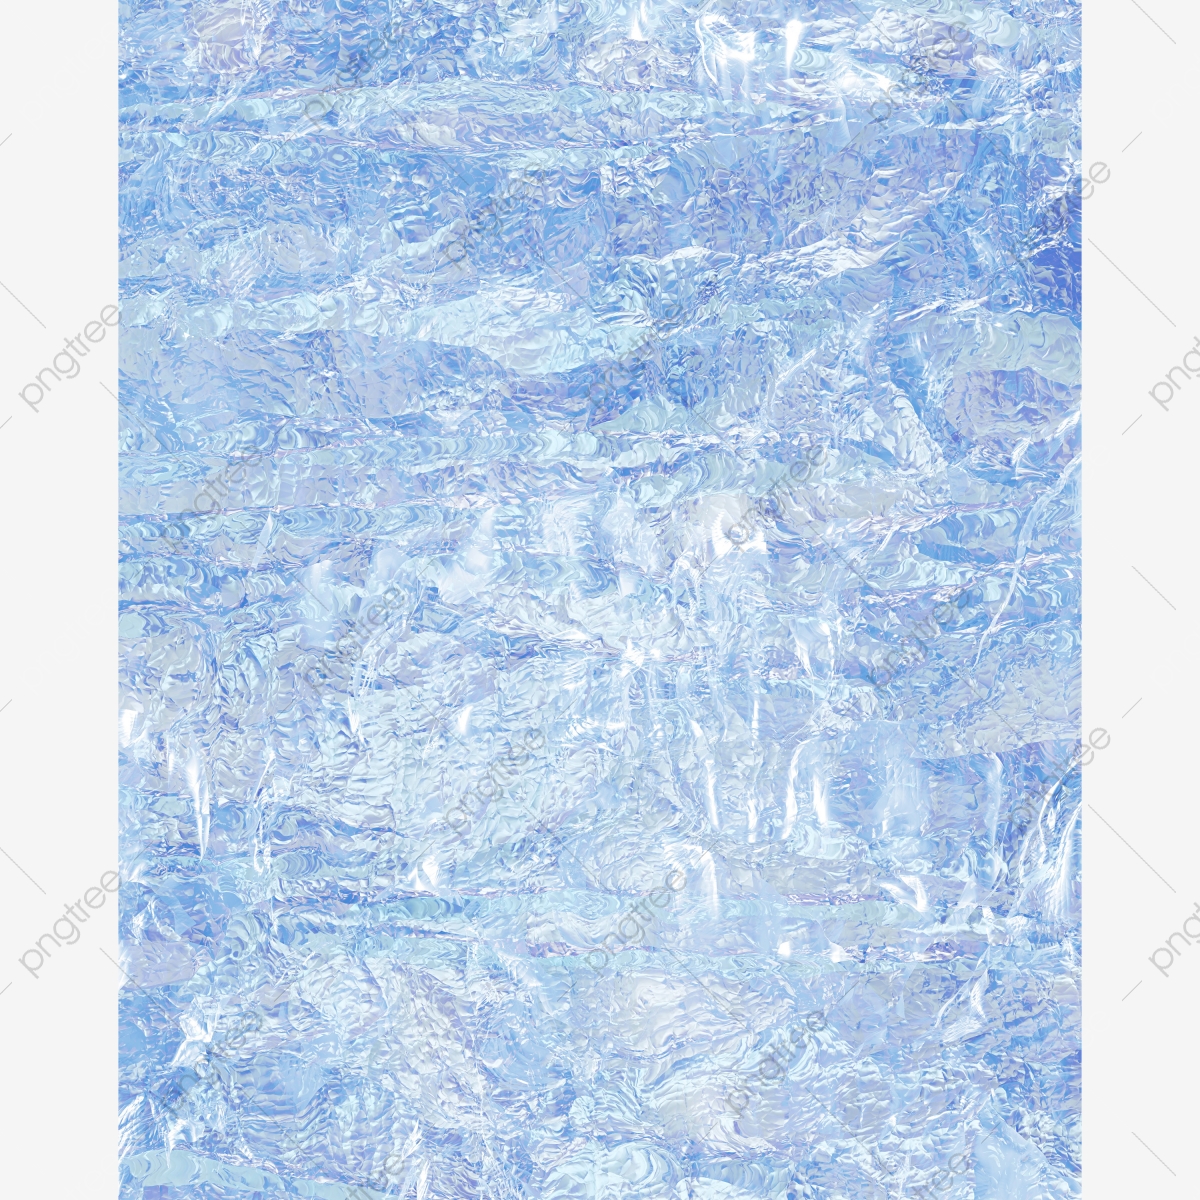 Ice Texture Background